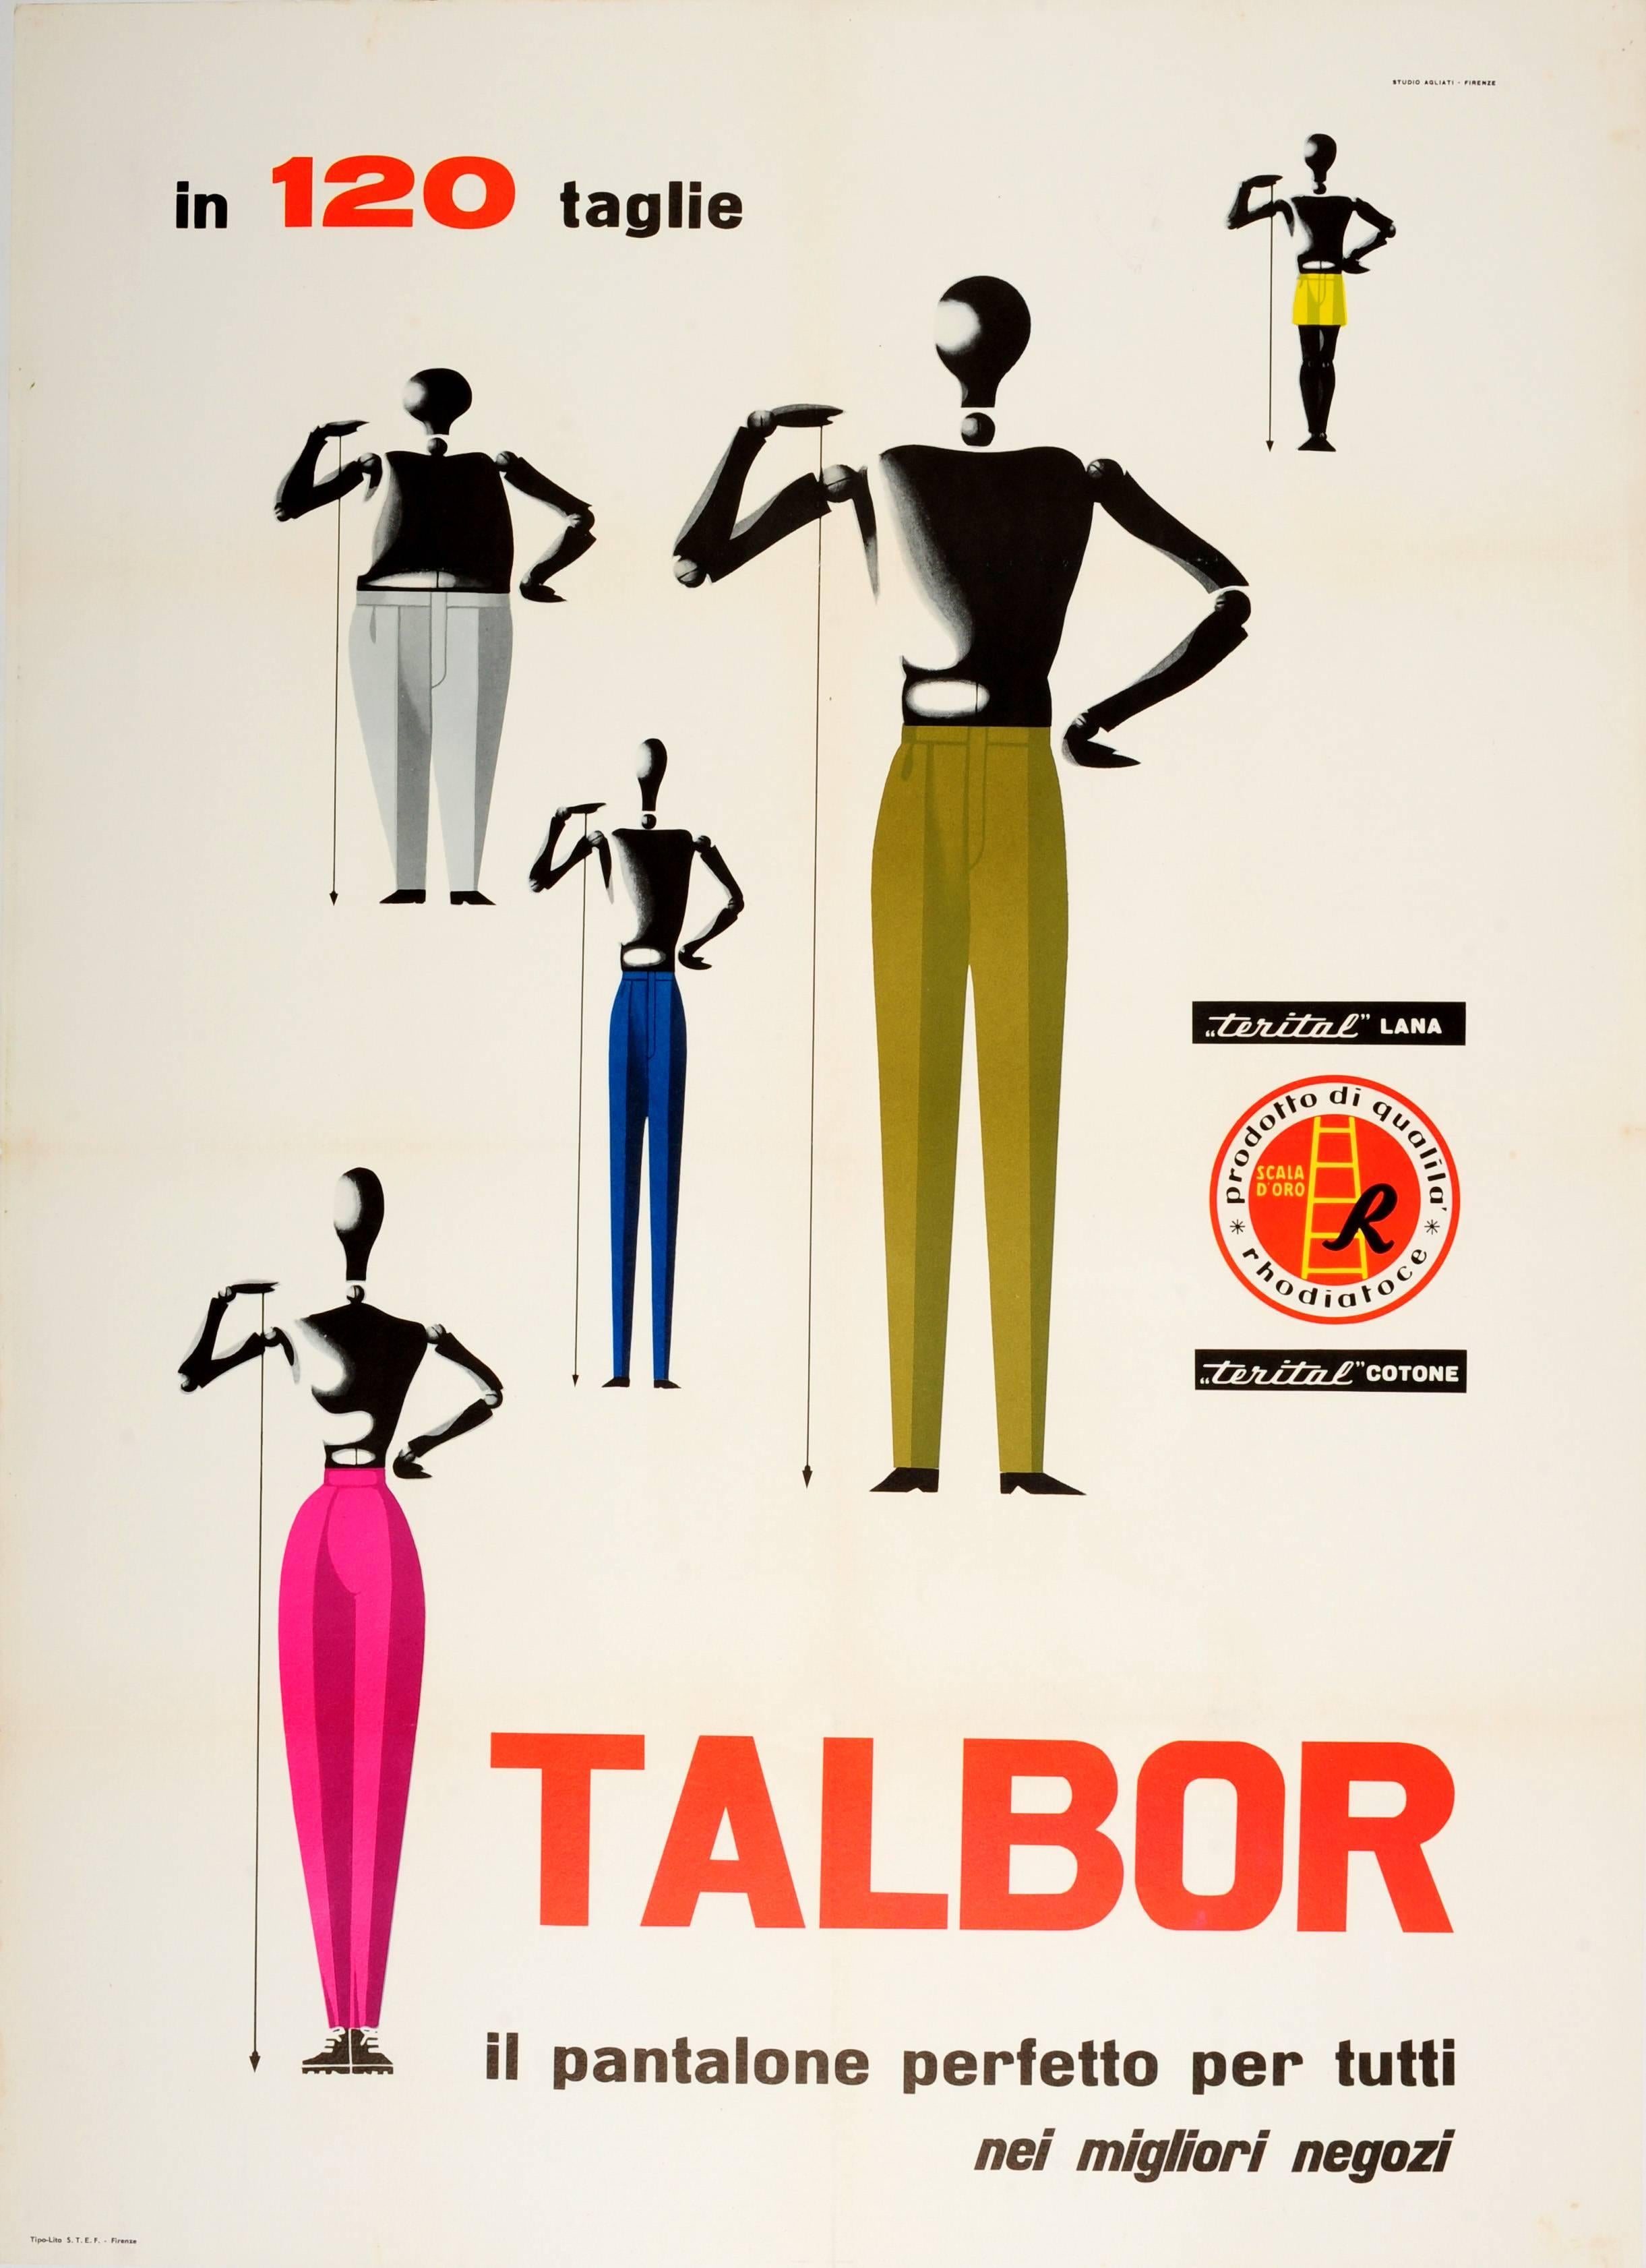 Studio Agliati Print - Large Original Vintage Fashion Advertising Poster For Talbor Pantalone Trousers